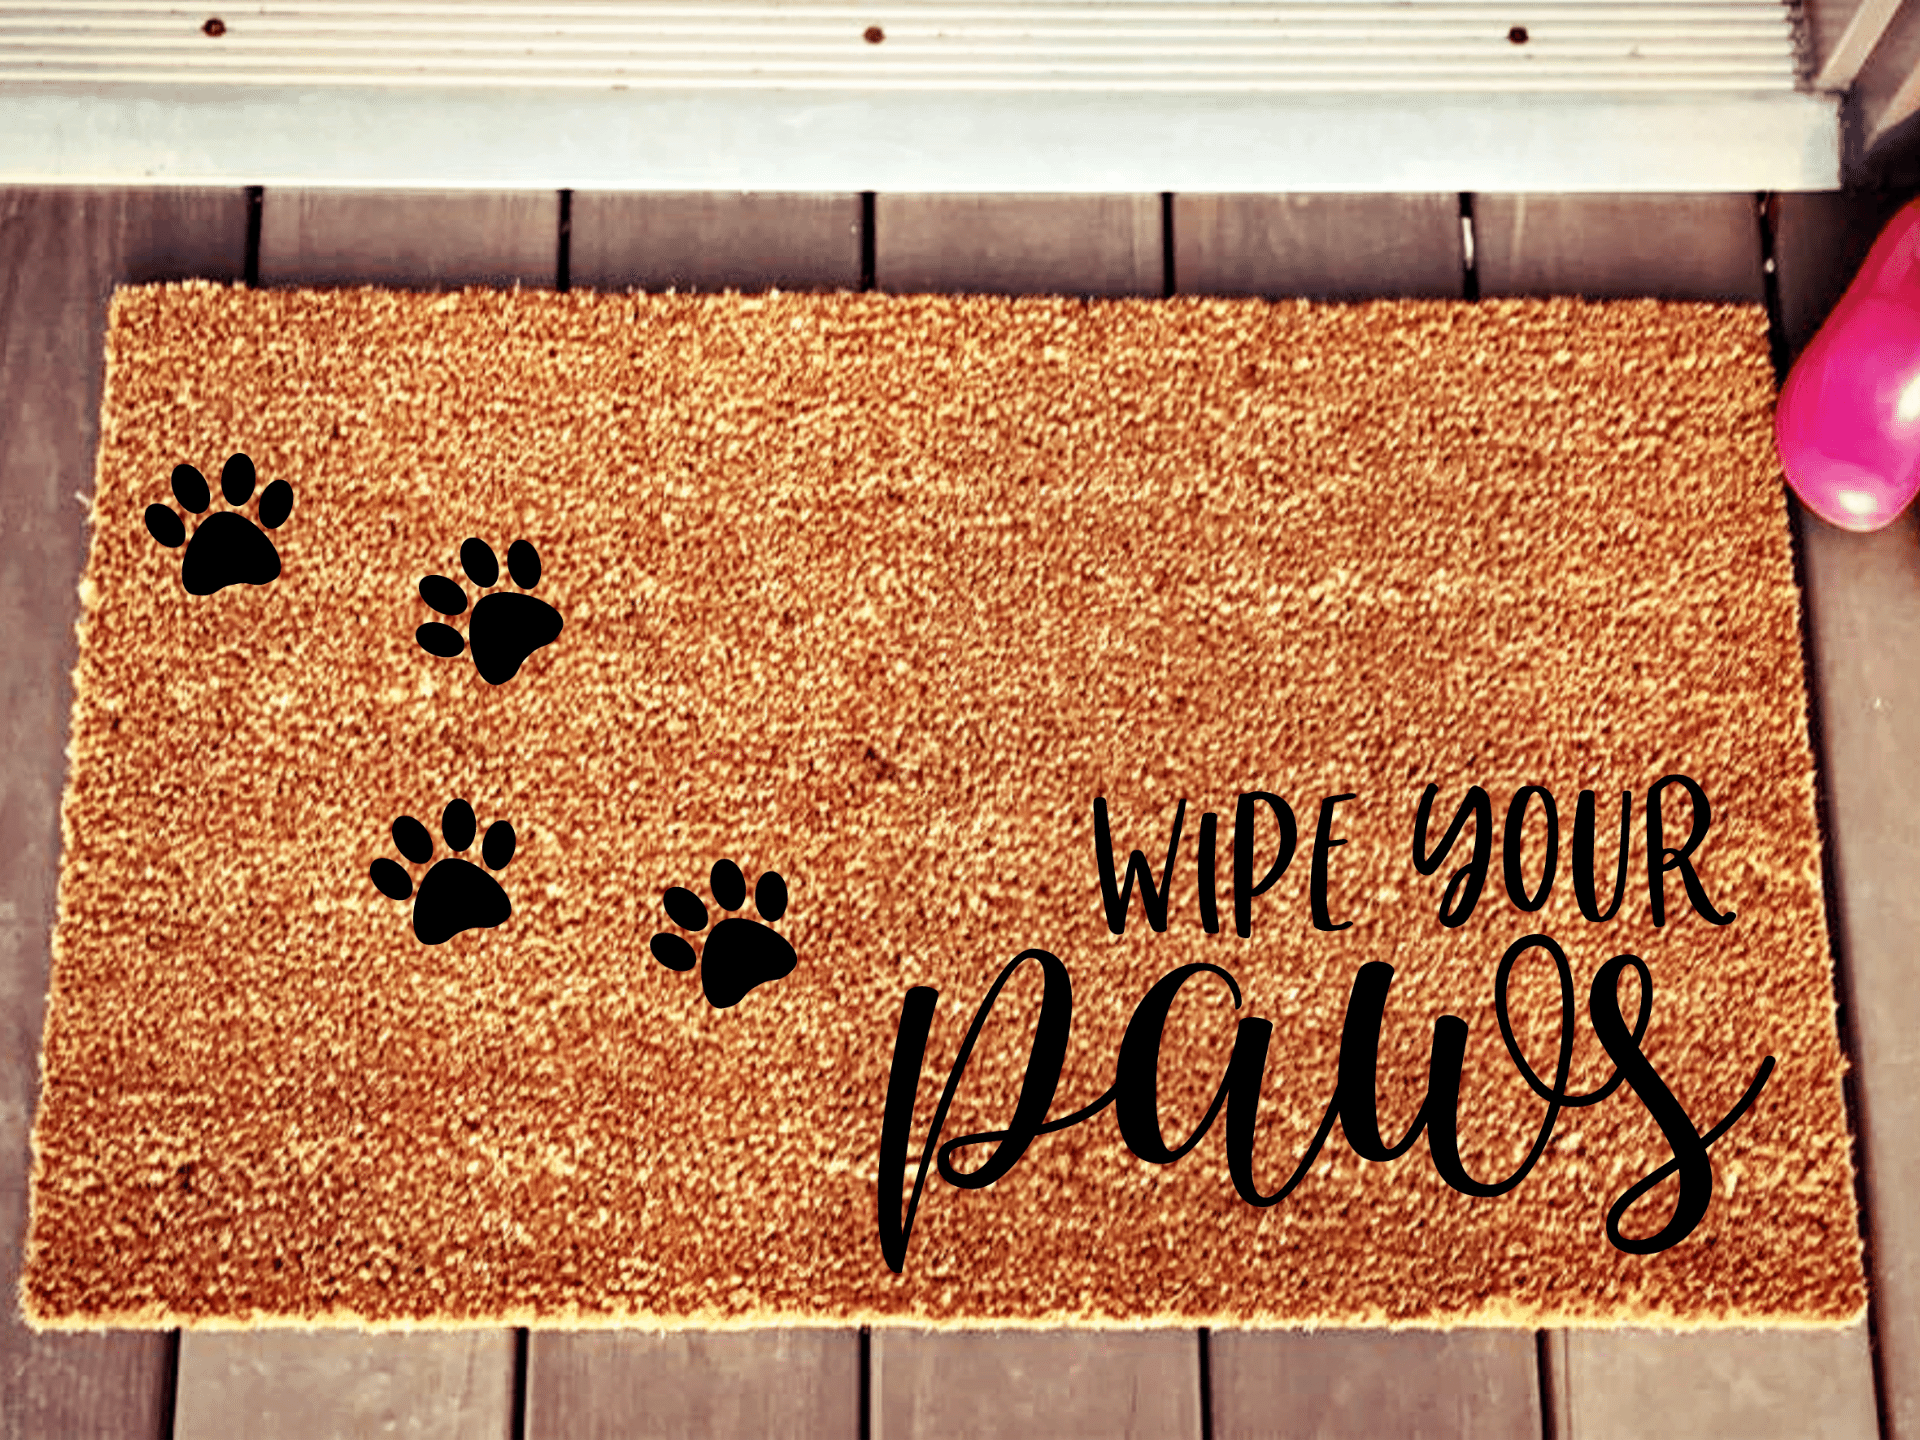 Wipe your paws cat or dog doormat - Personalised Doormat Australia